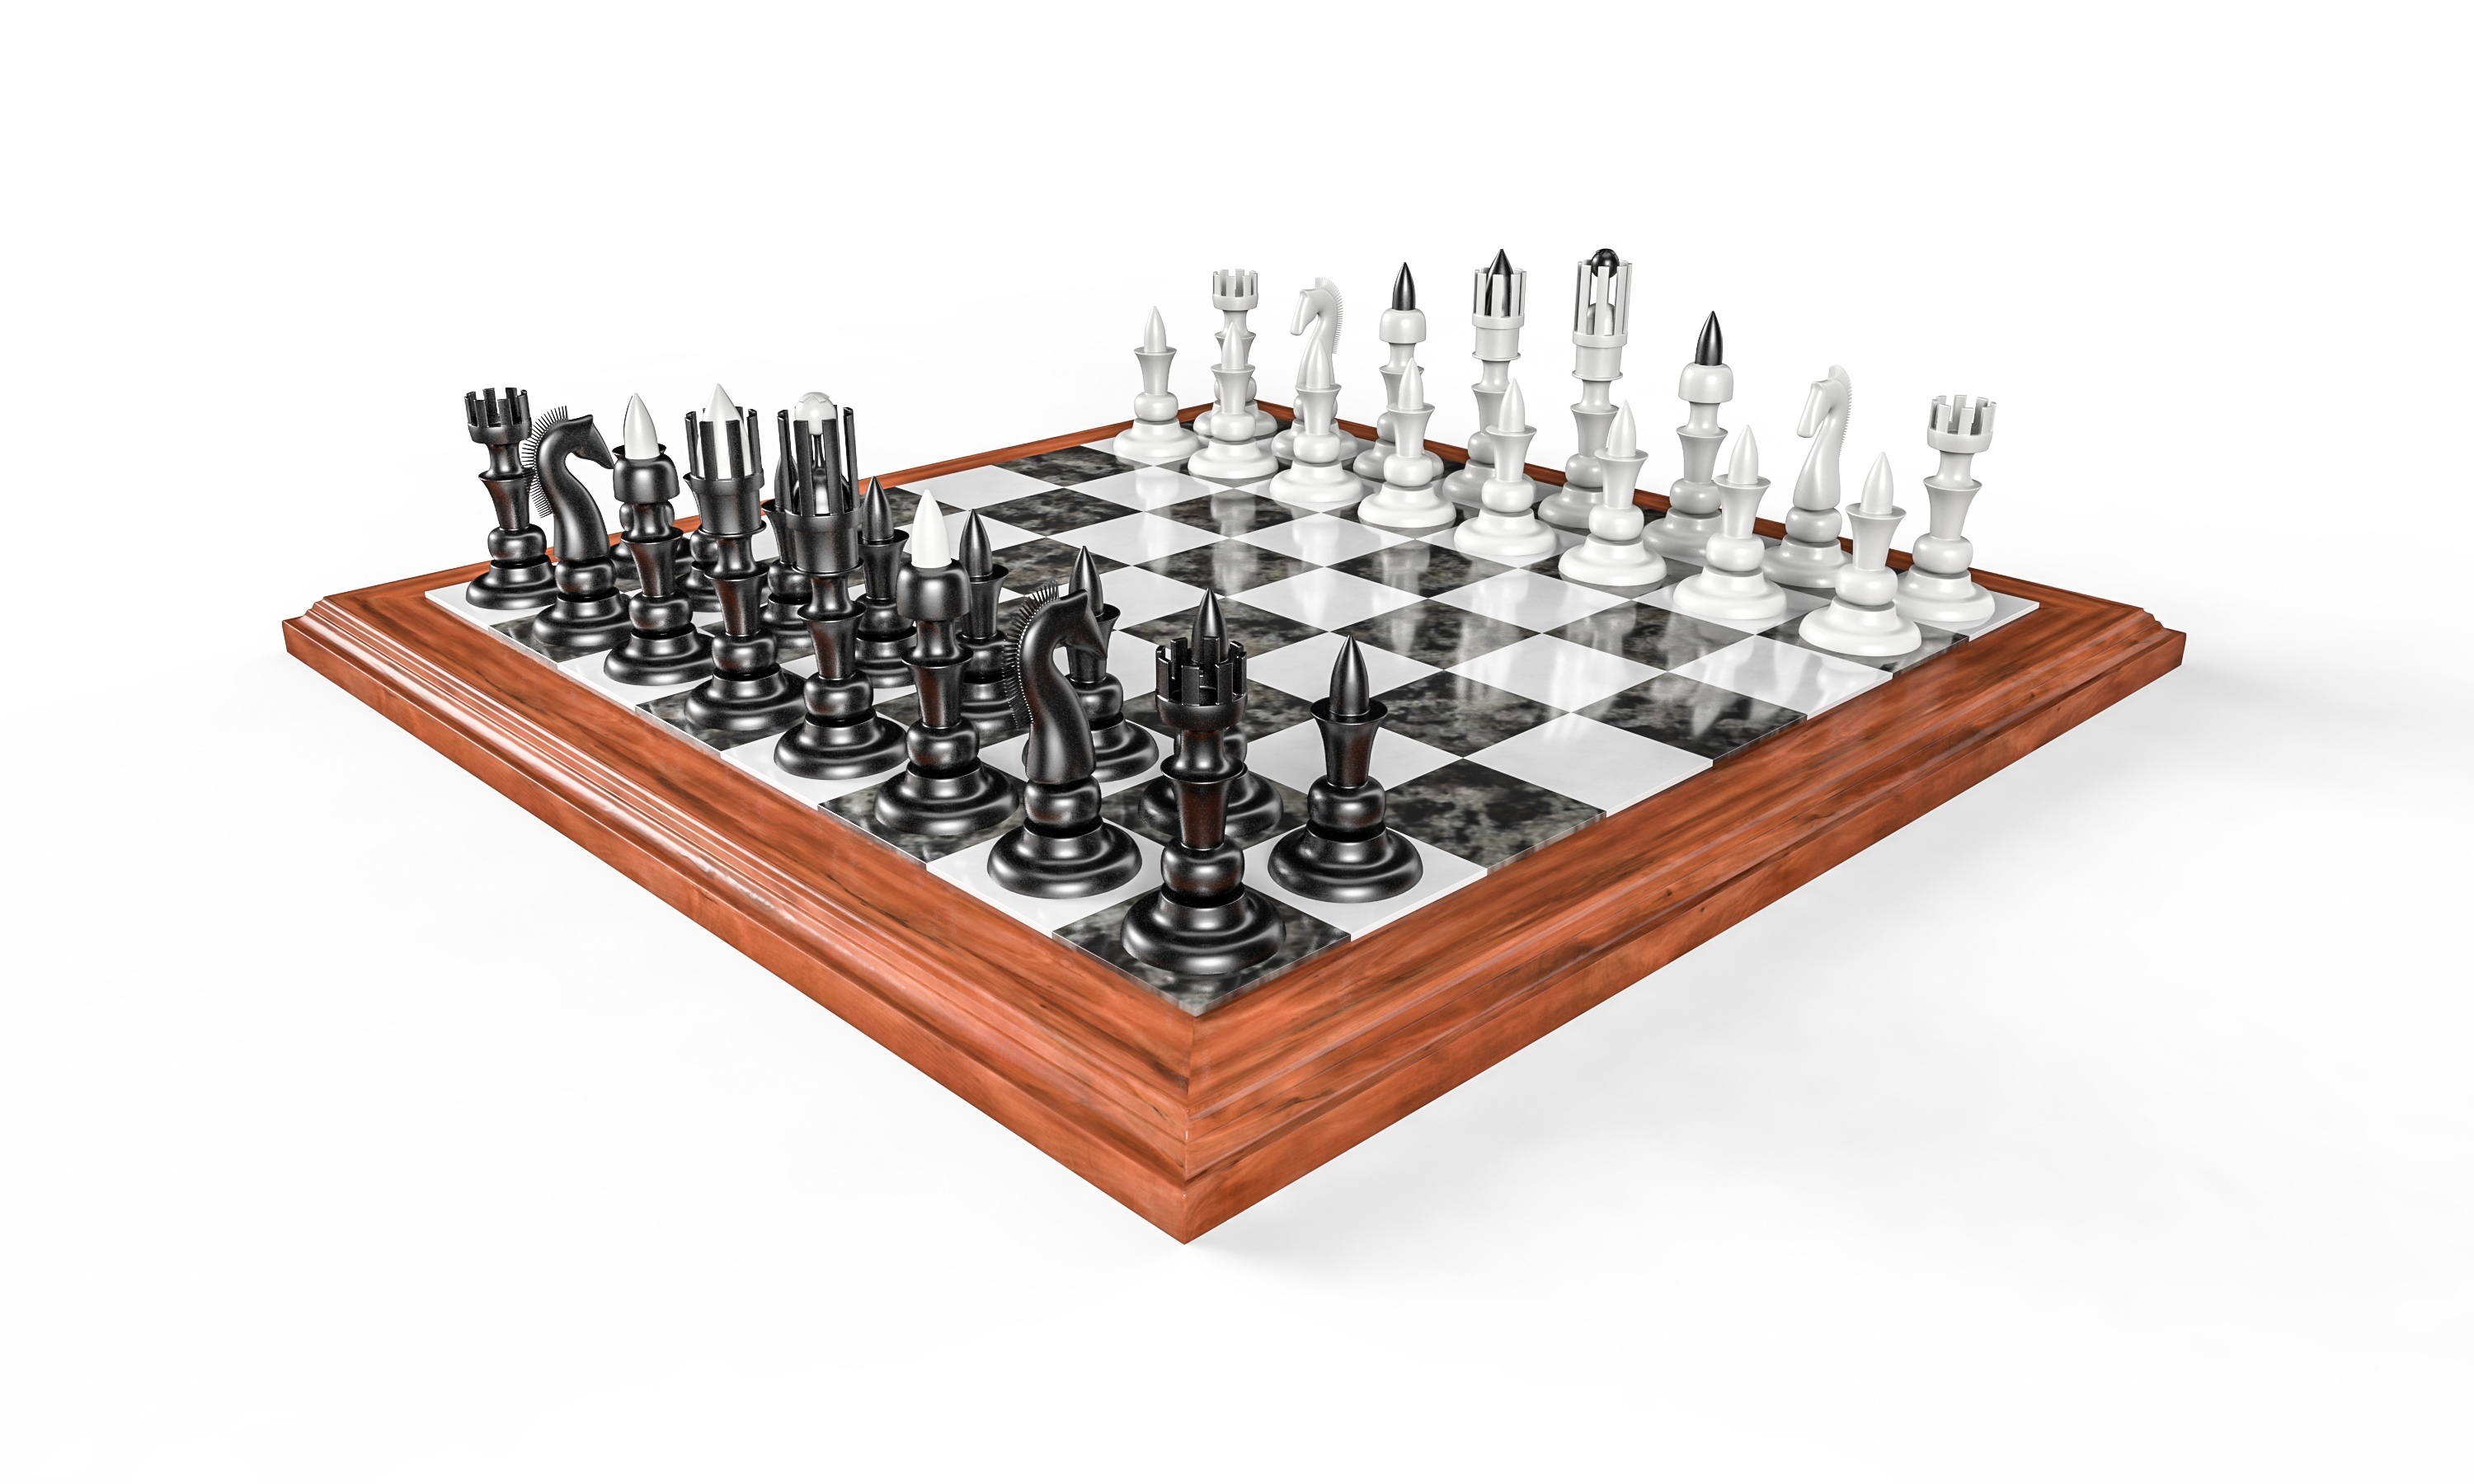 Chess board by Arek Socha